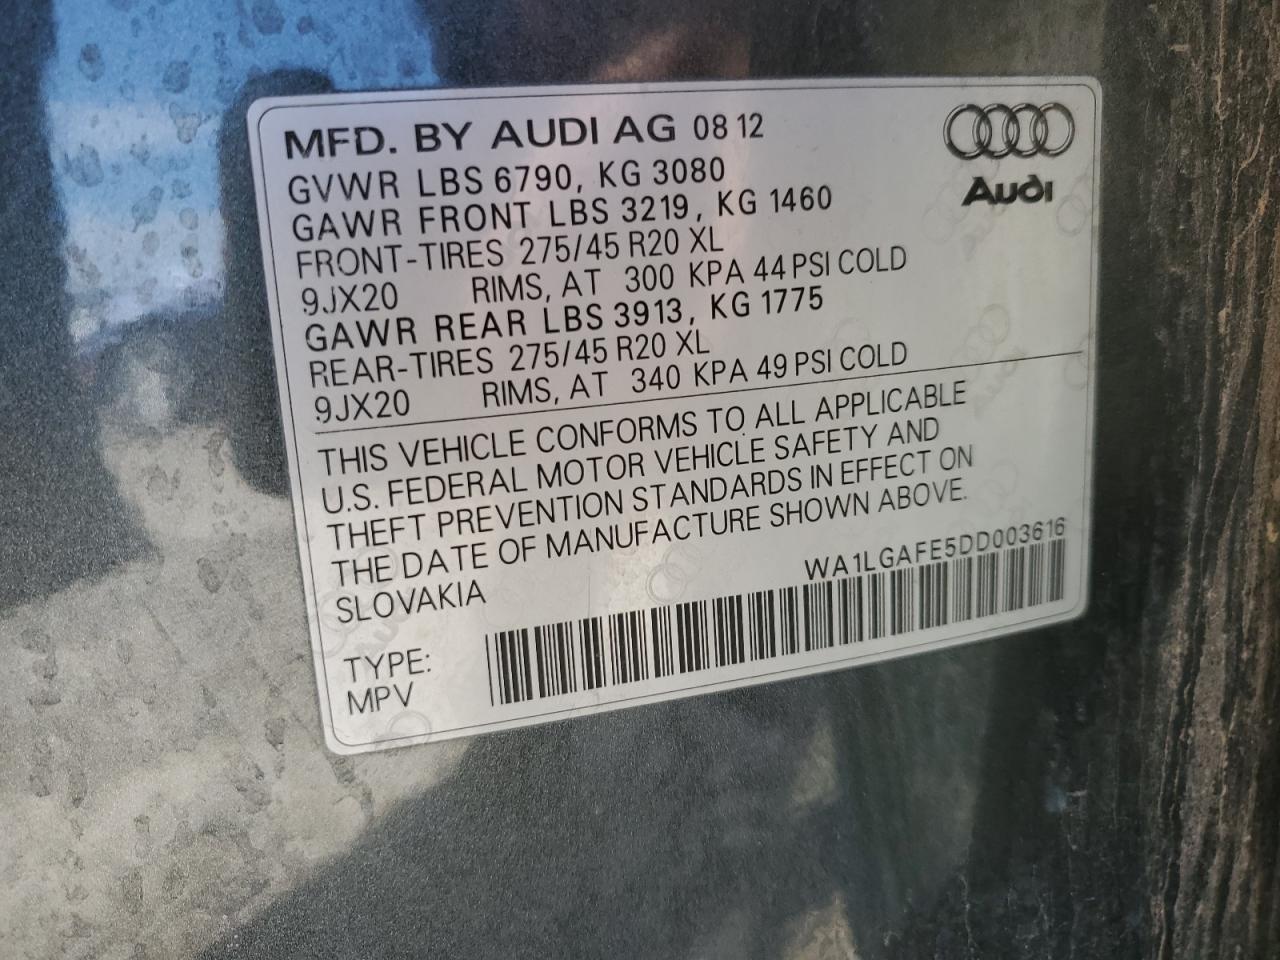 2013 Audi Q7 Premium Plus vin: WA1LGAFE5DD003616